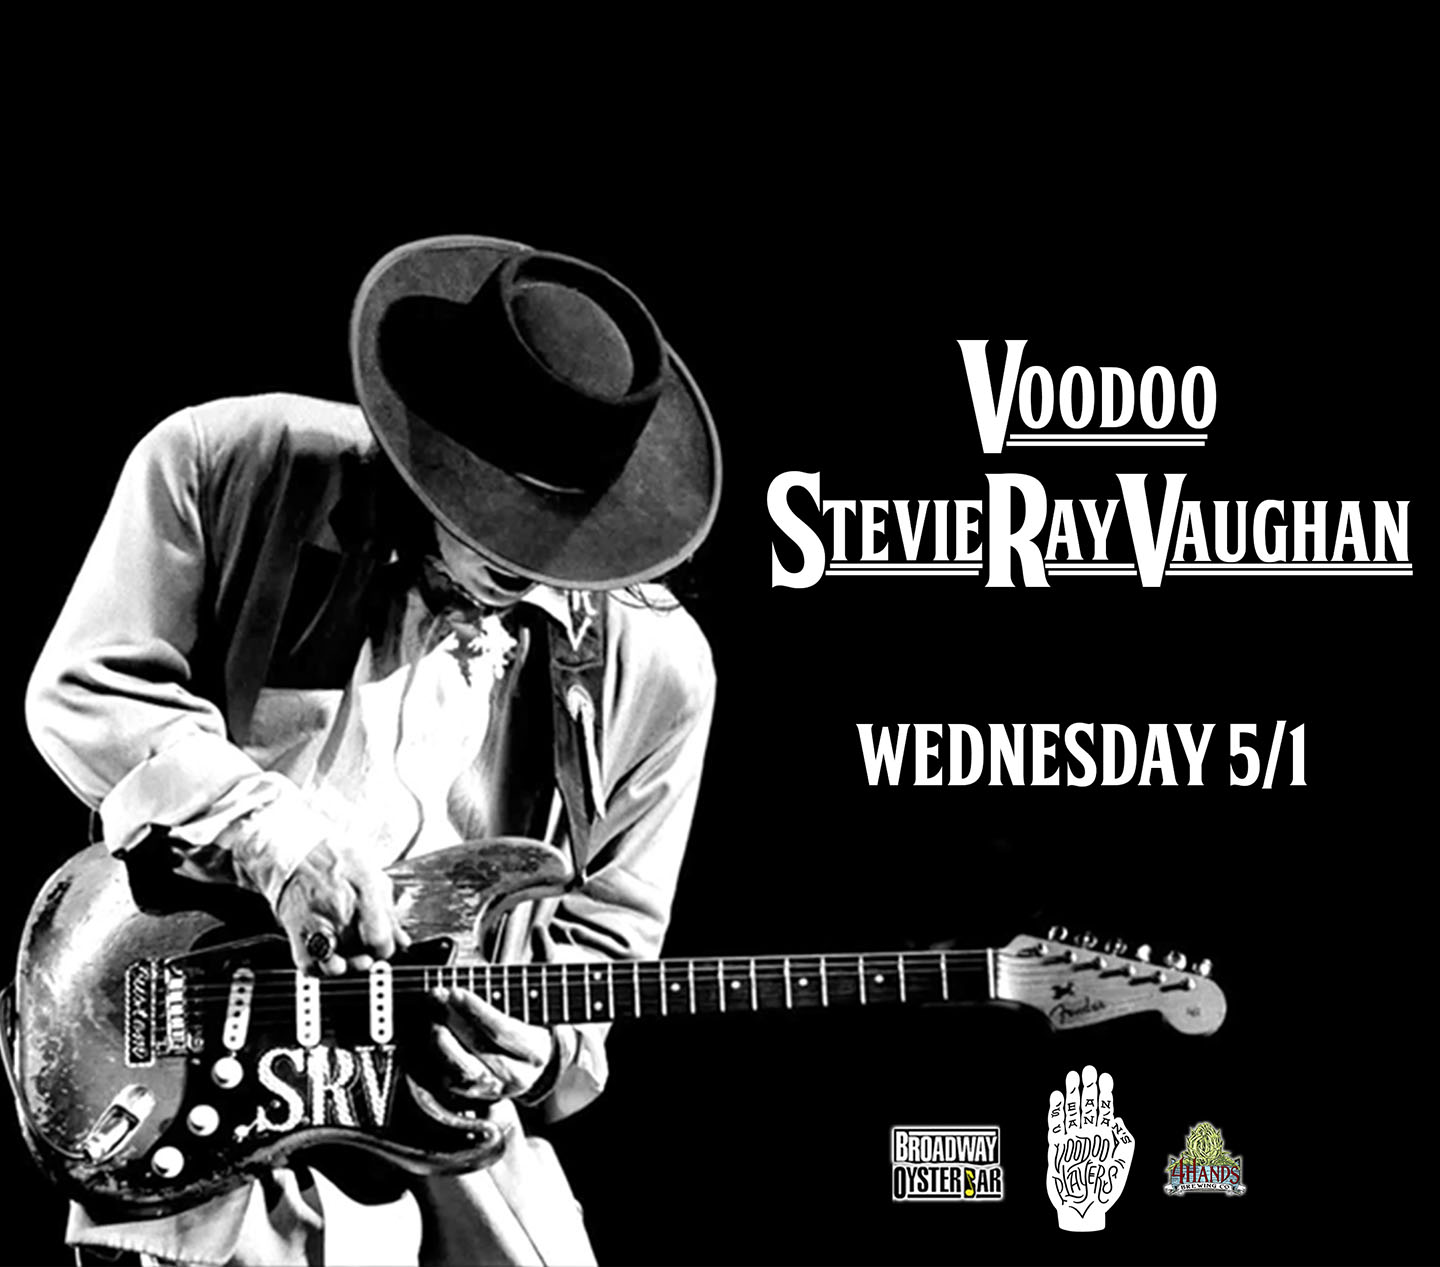 Broadway-Oyster-Bar Sean Canan Voodoo Stevie Ray Vaughan image